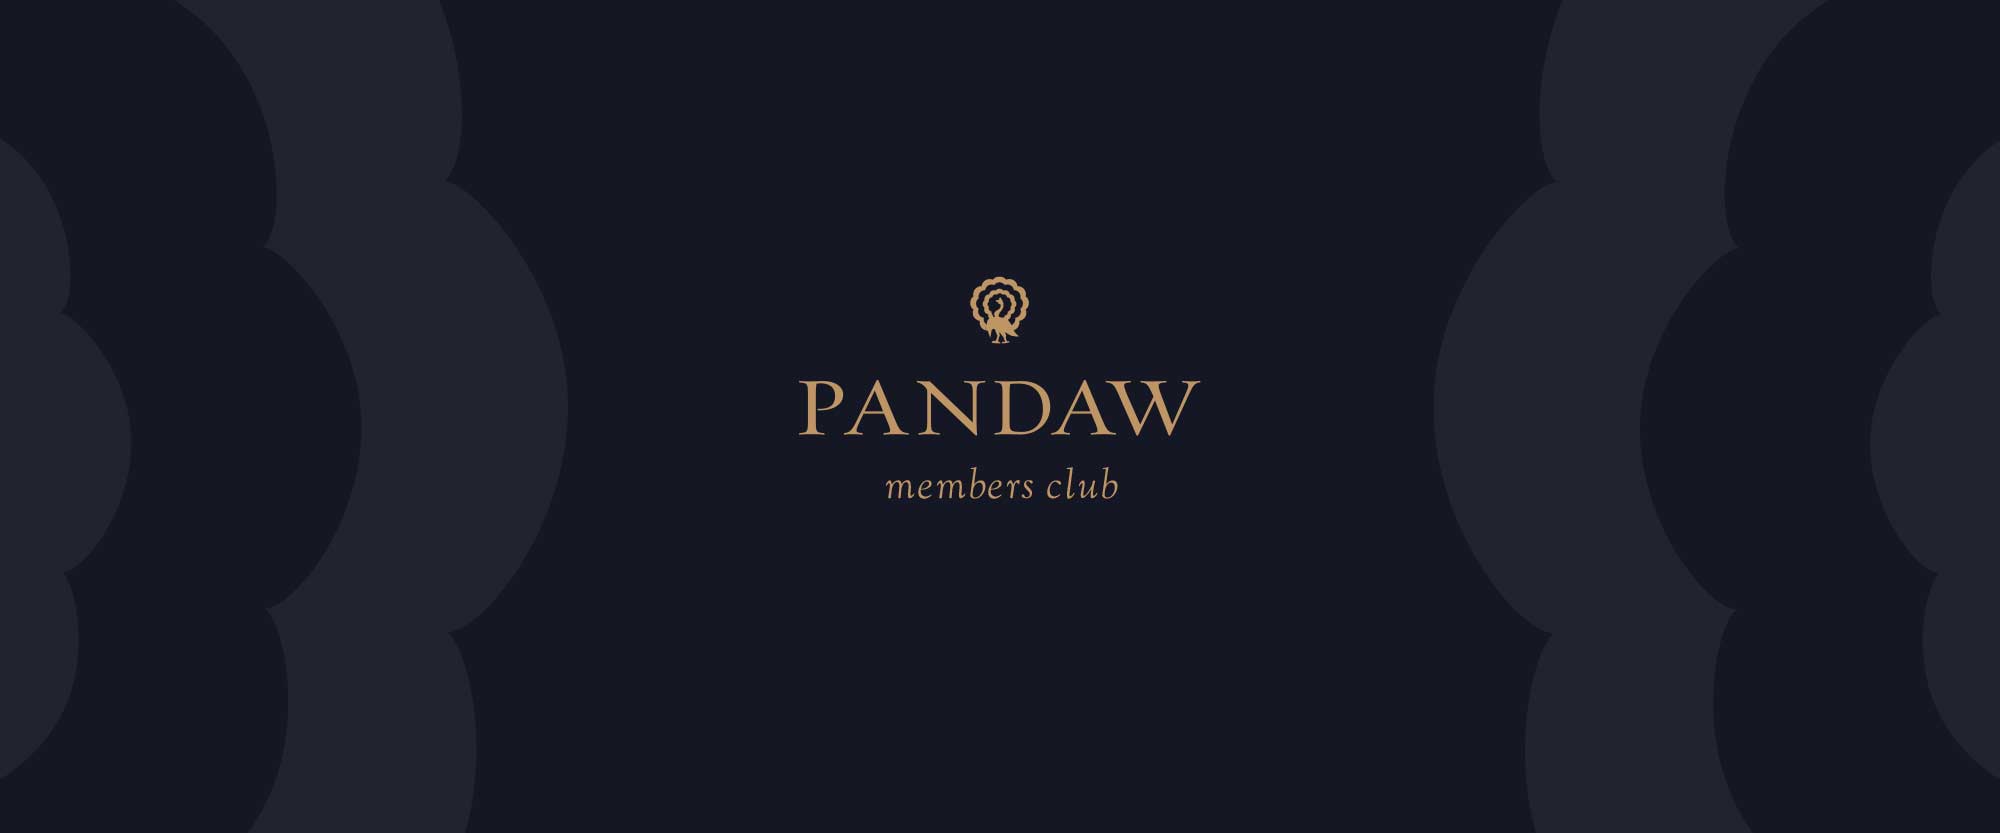 Pandaw revamps its popular Member’s Club